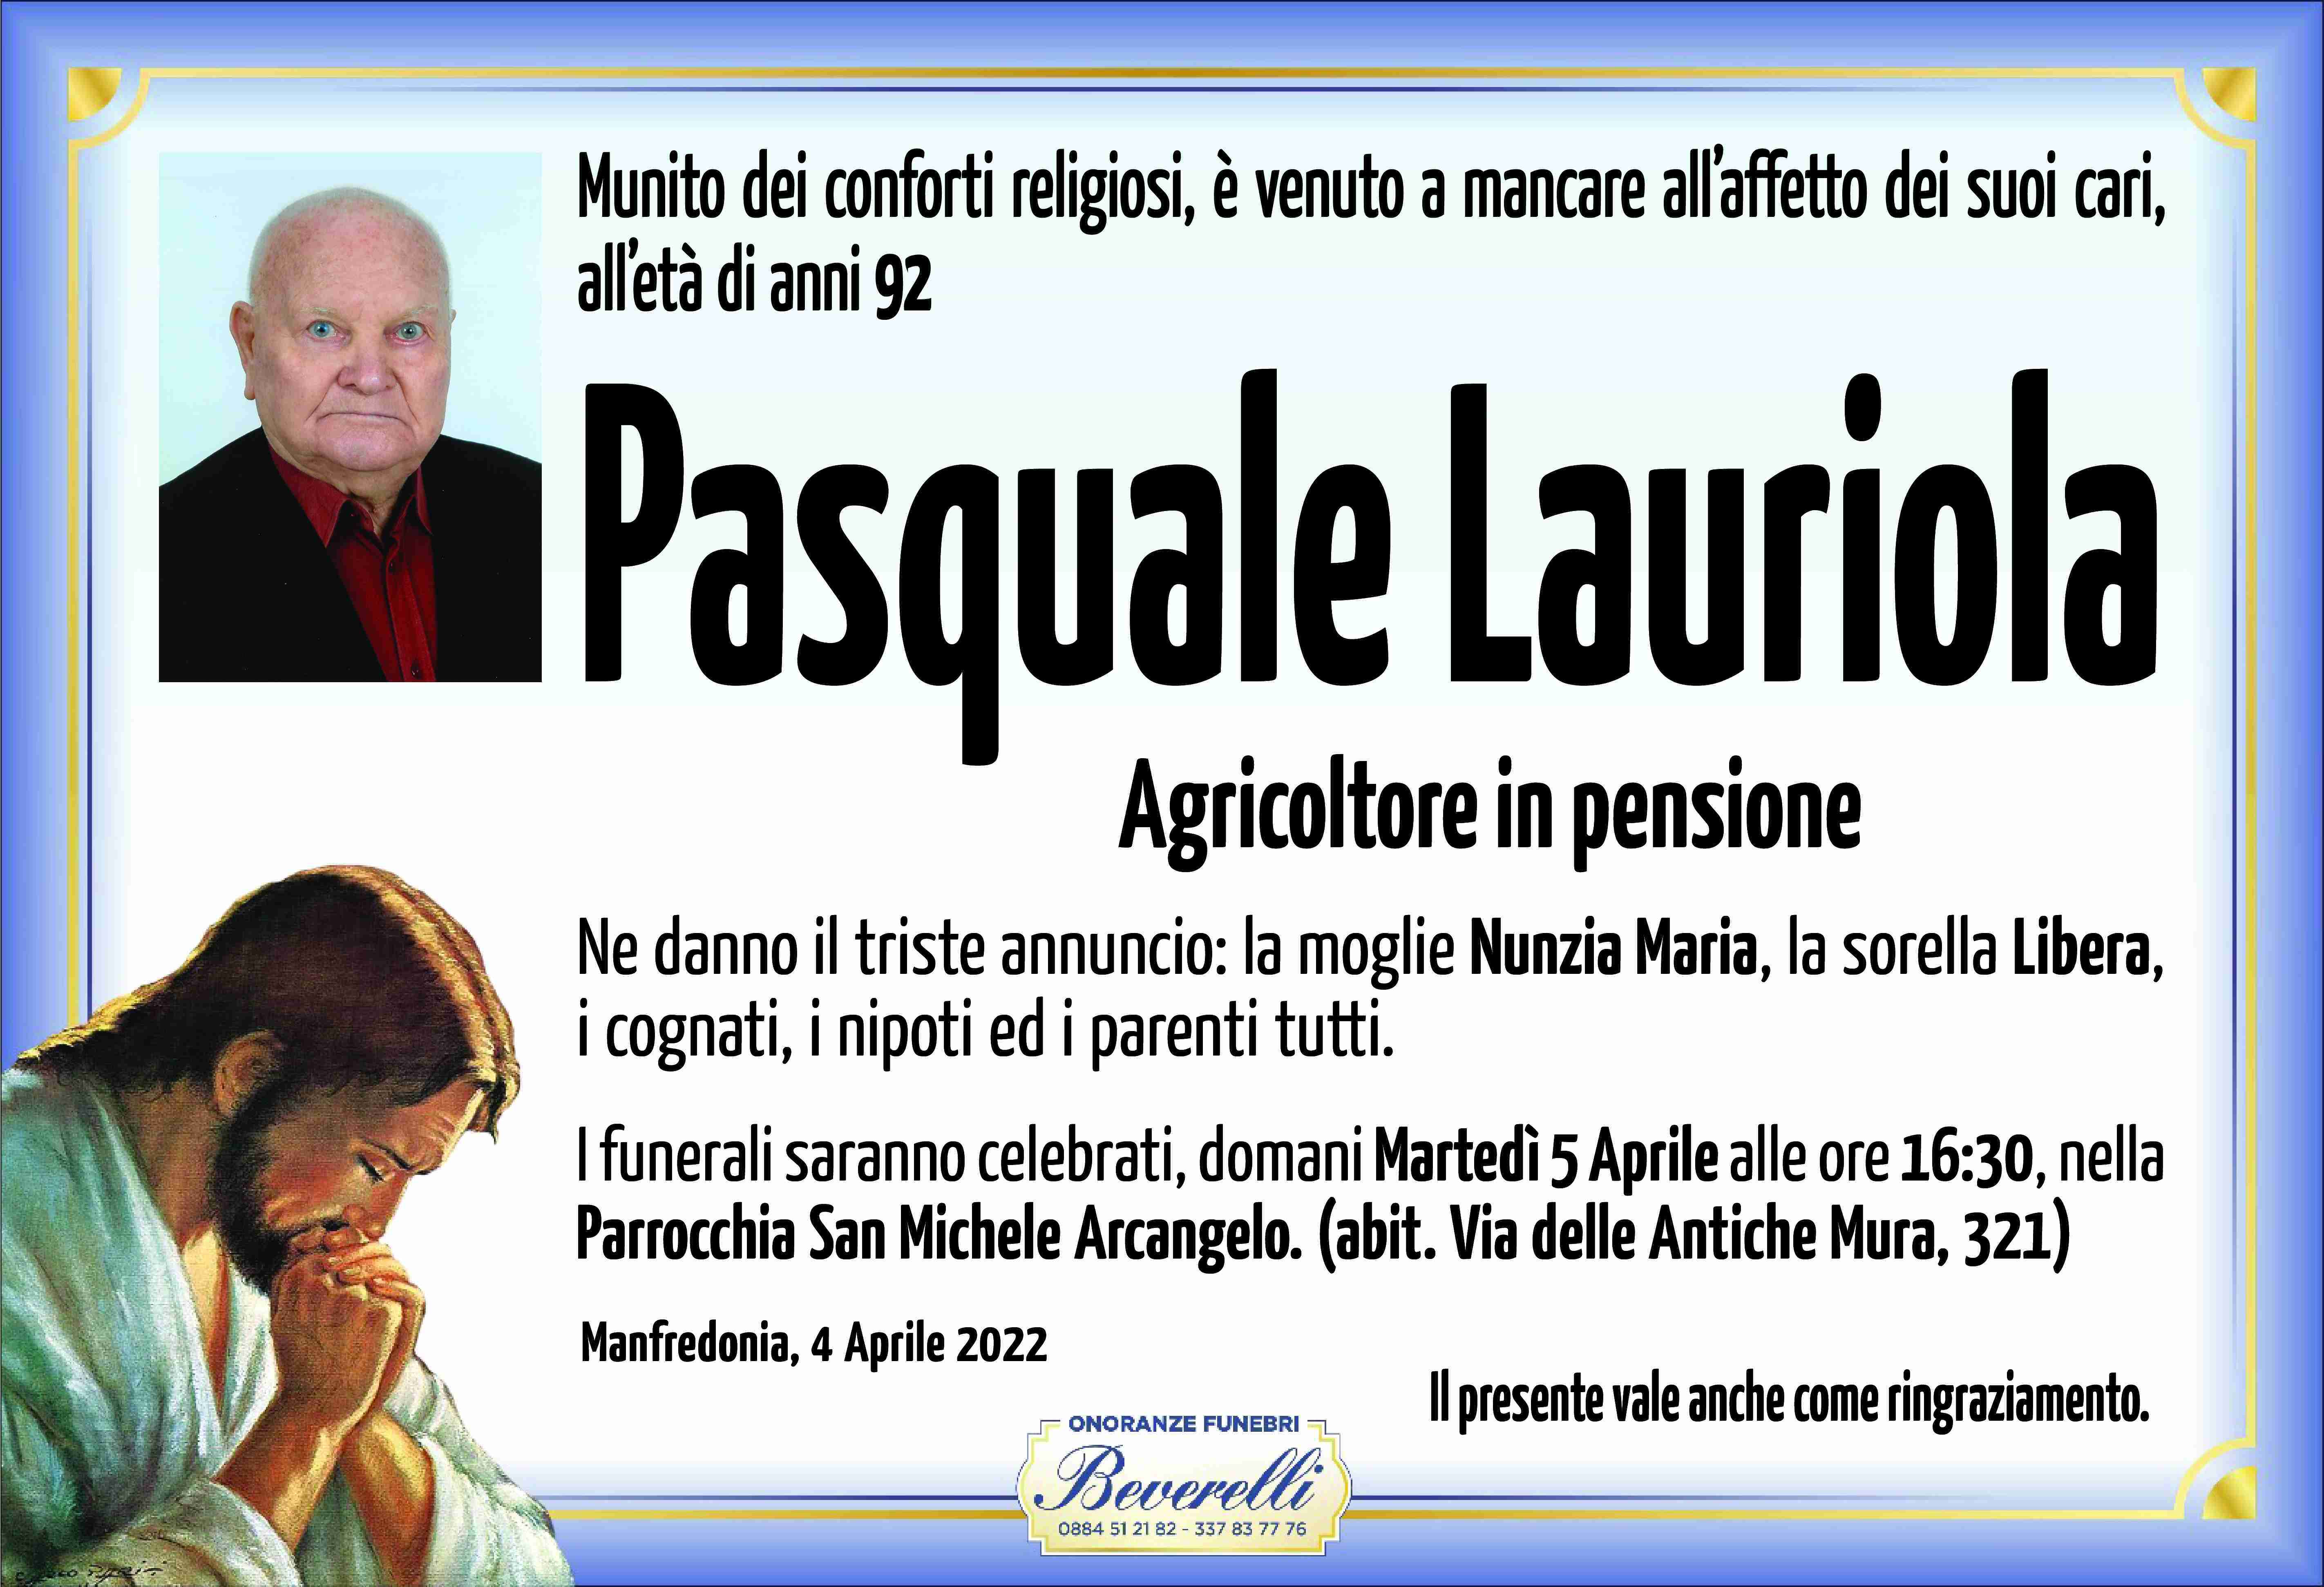 Pasquale Lauriola